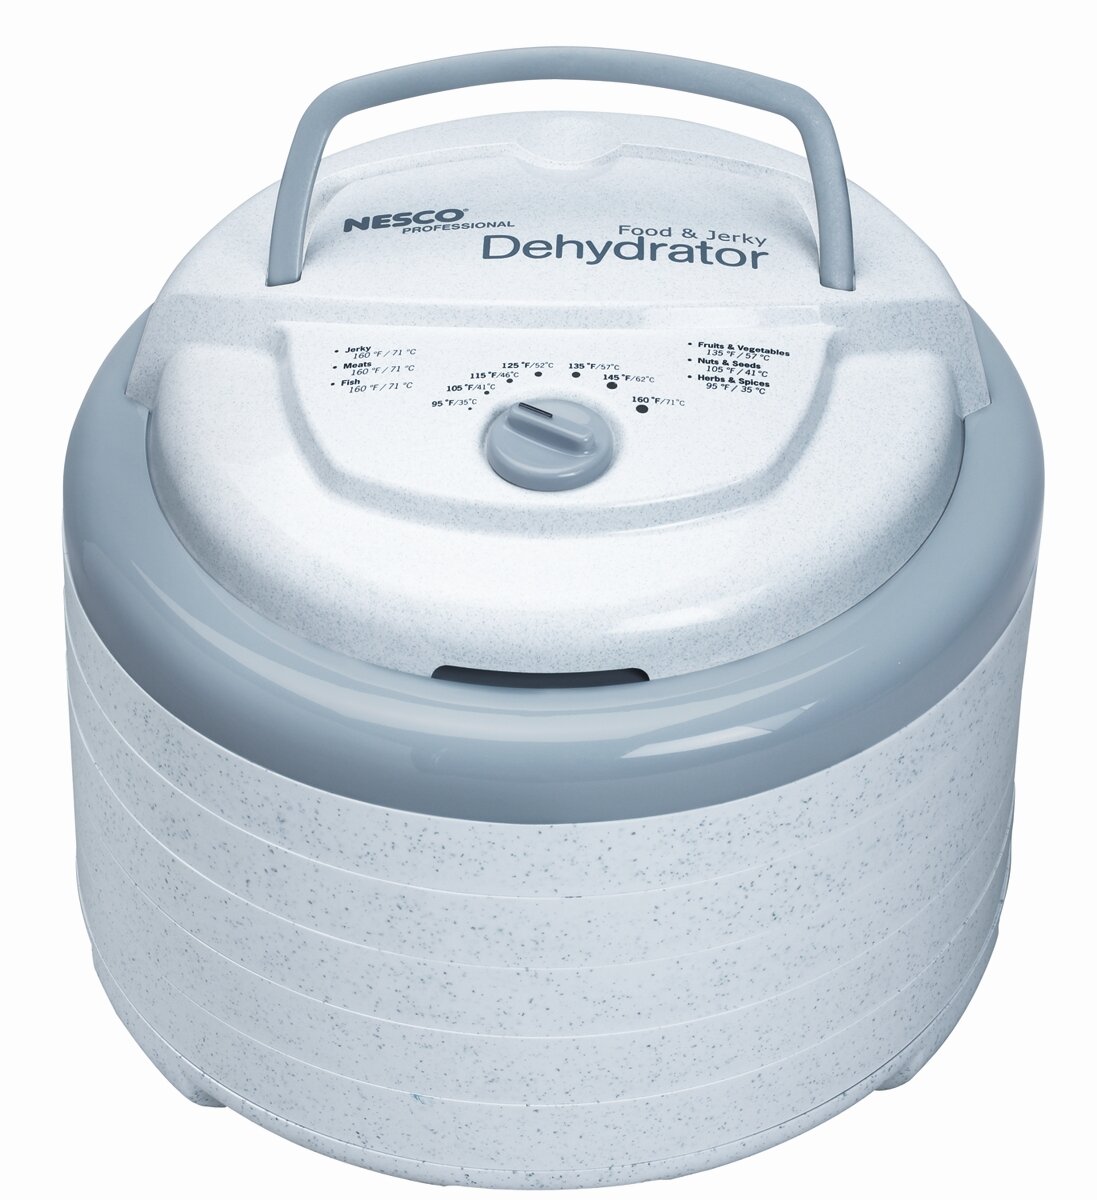 Nesco UL Listed 4-Tray Food Dehydrator, Even Drying